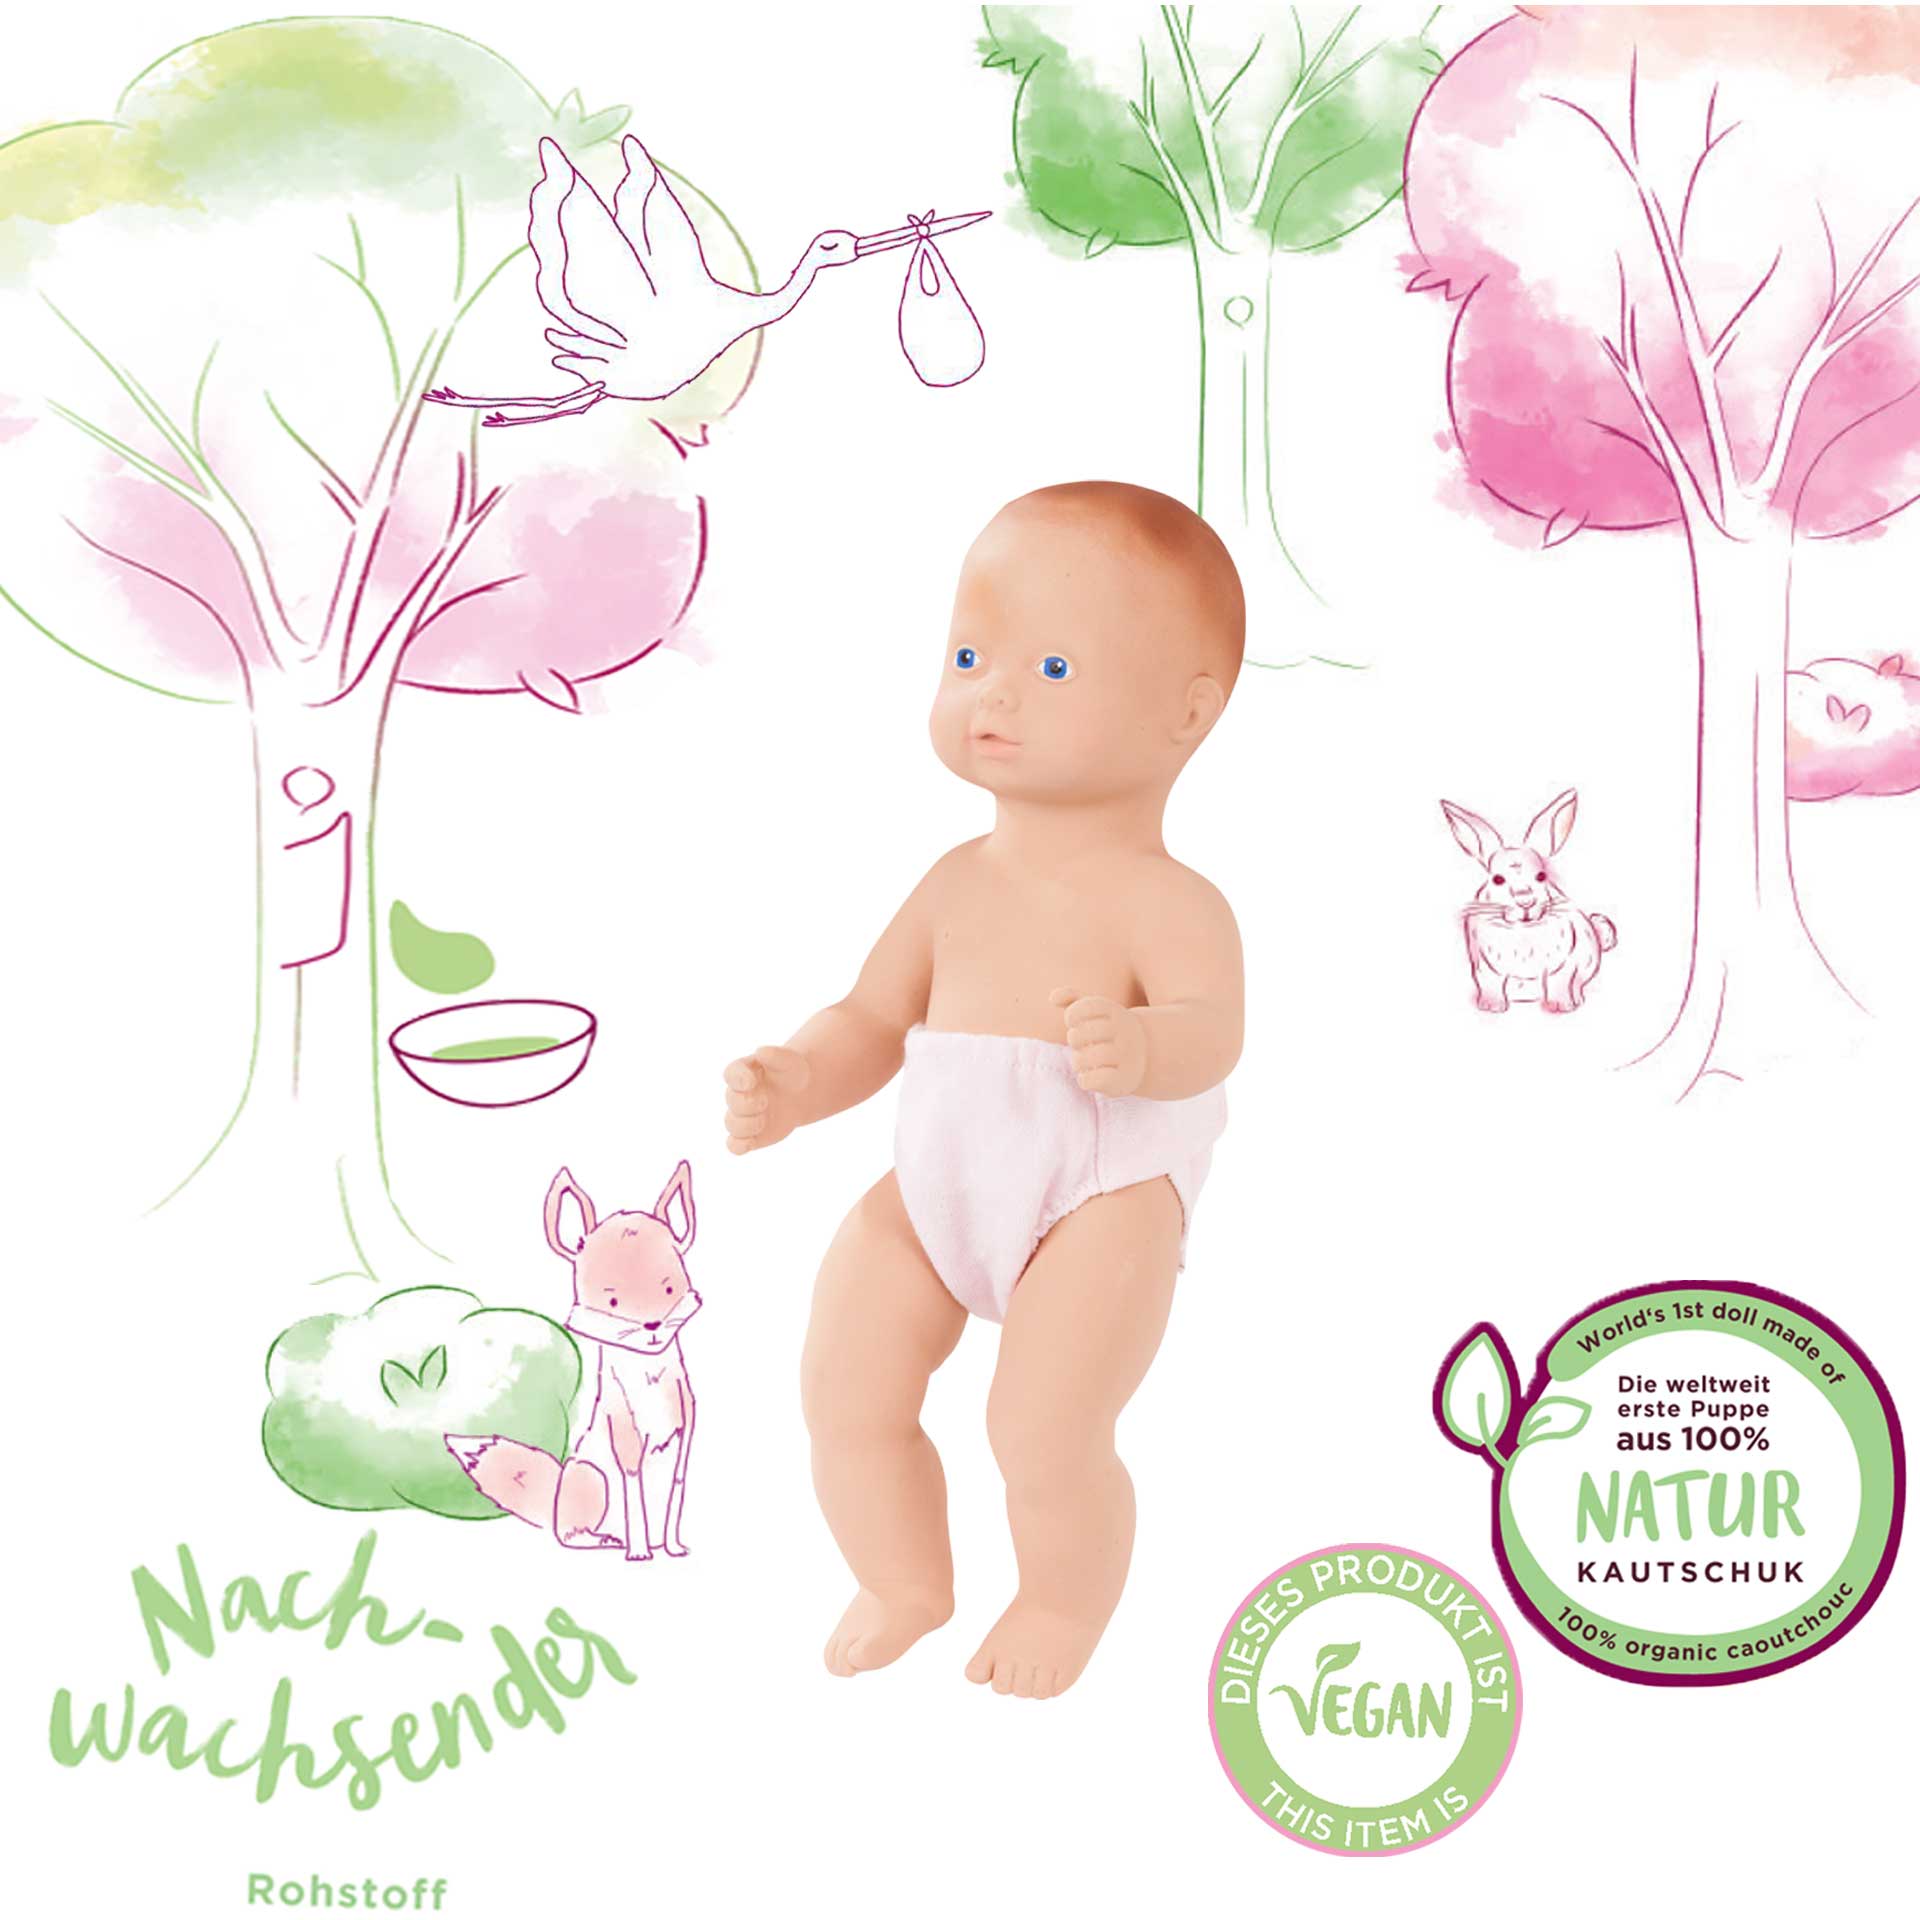 baby-pure-lina-babypuppe-badepuppe-goetz-badebaby-kautschukpuppe-naturkautschuk-oekologisch-nachhaltig-vegan